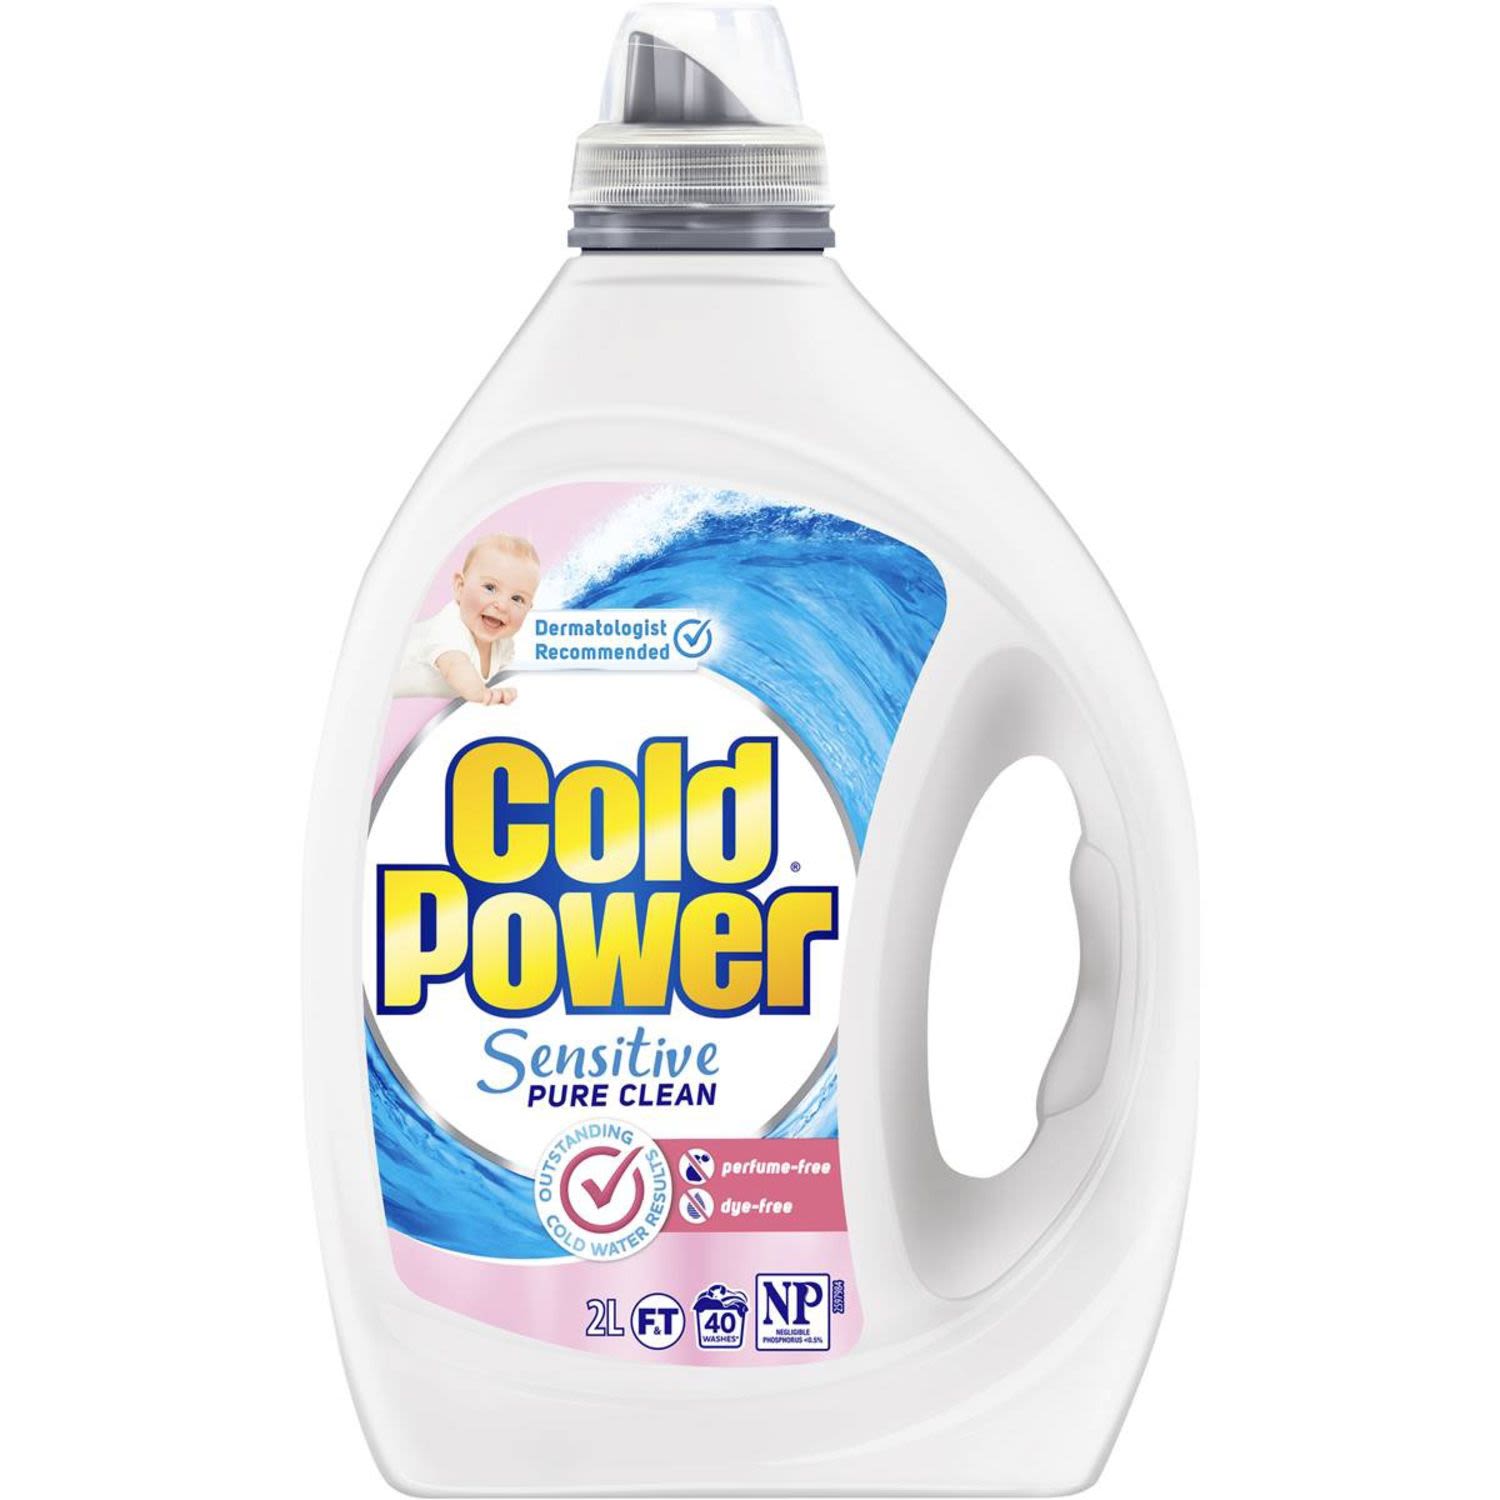 Cold Power Pure Clean Laundry Detergent Liquid for sensitive skin, 2 Litre